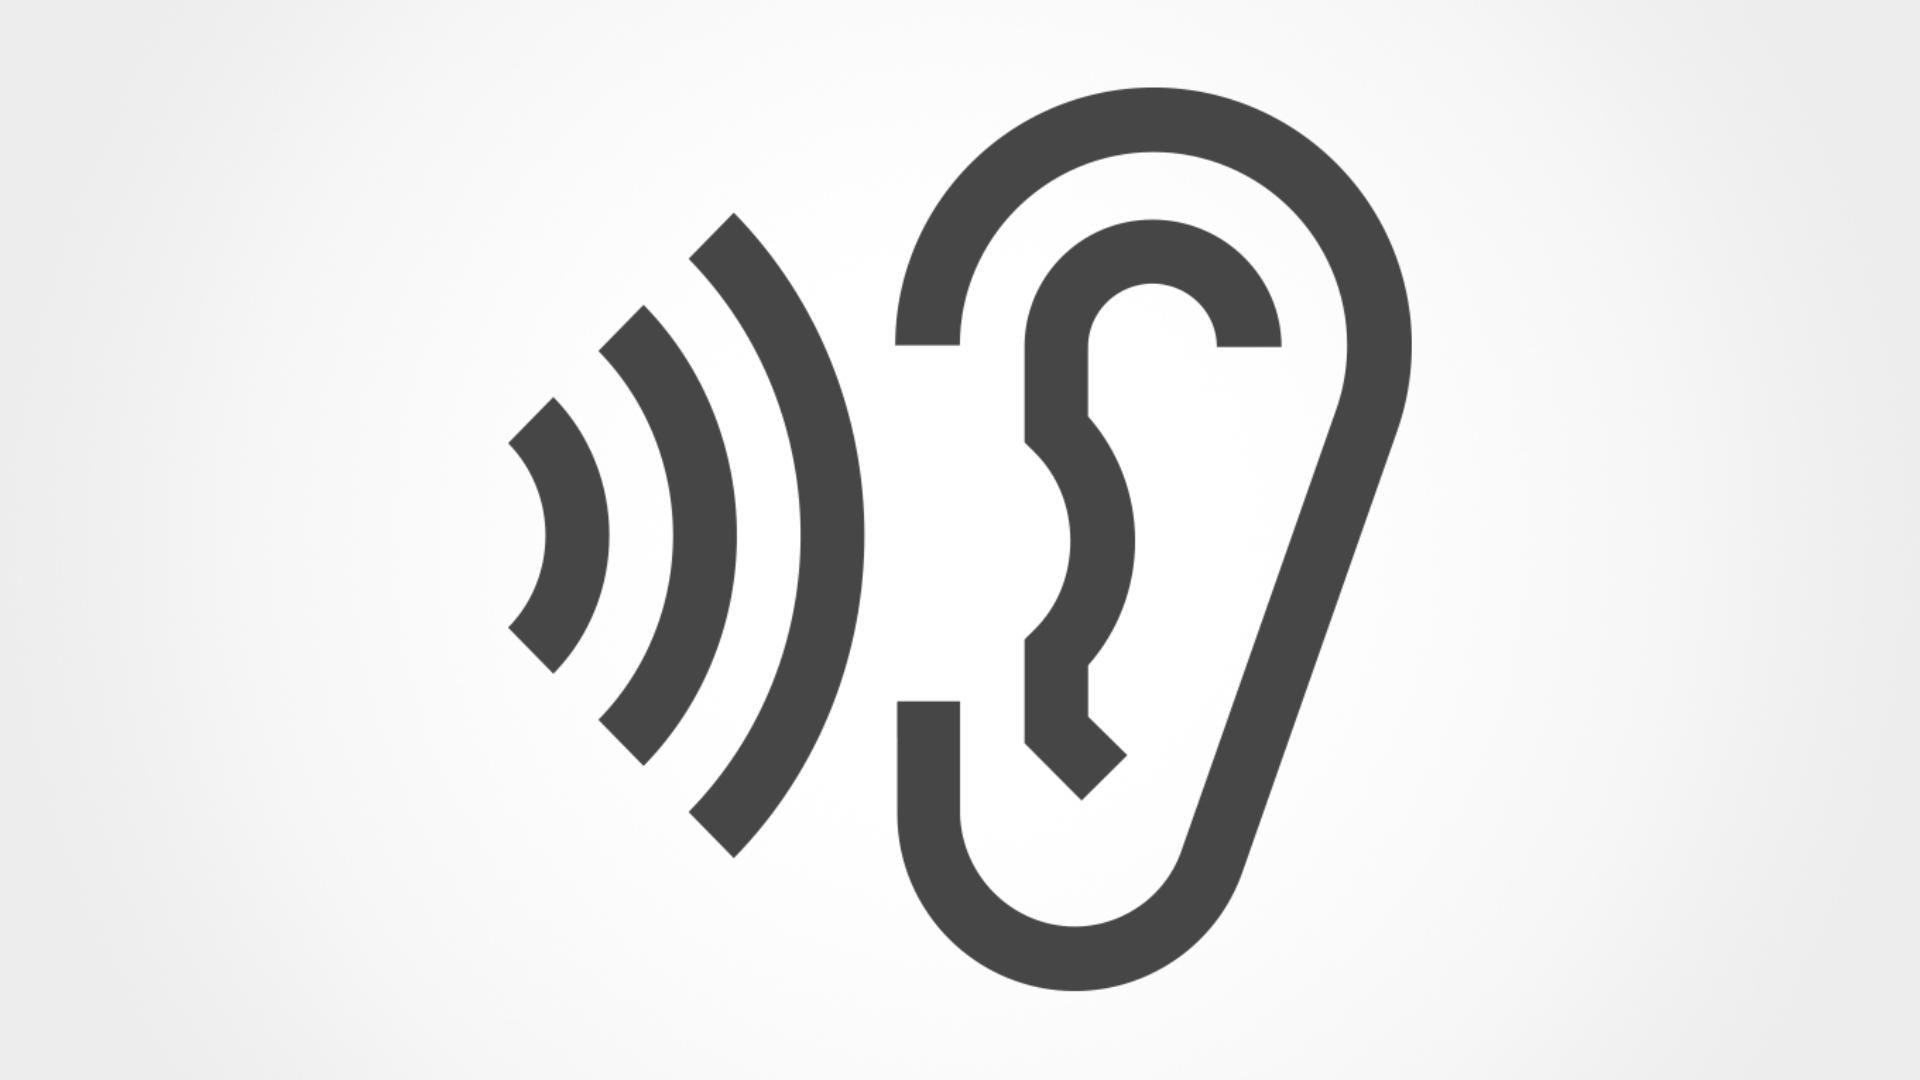 Ear depicting quieter sound levels